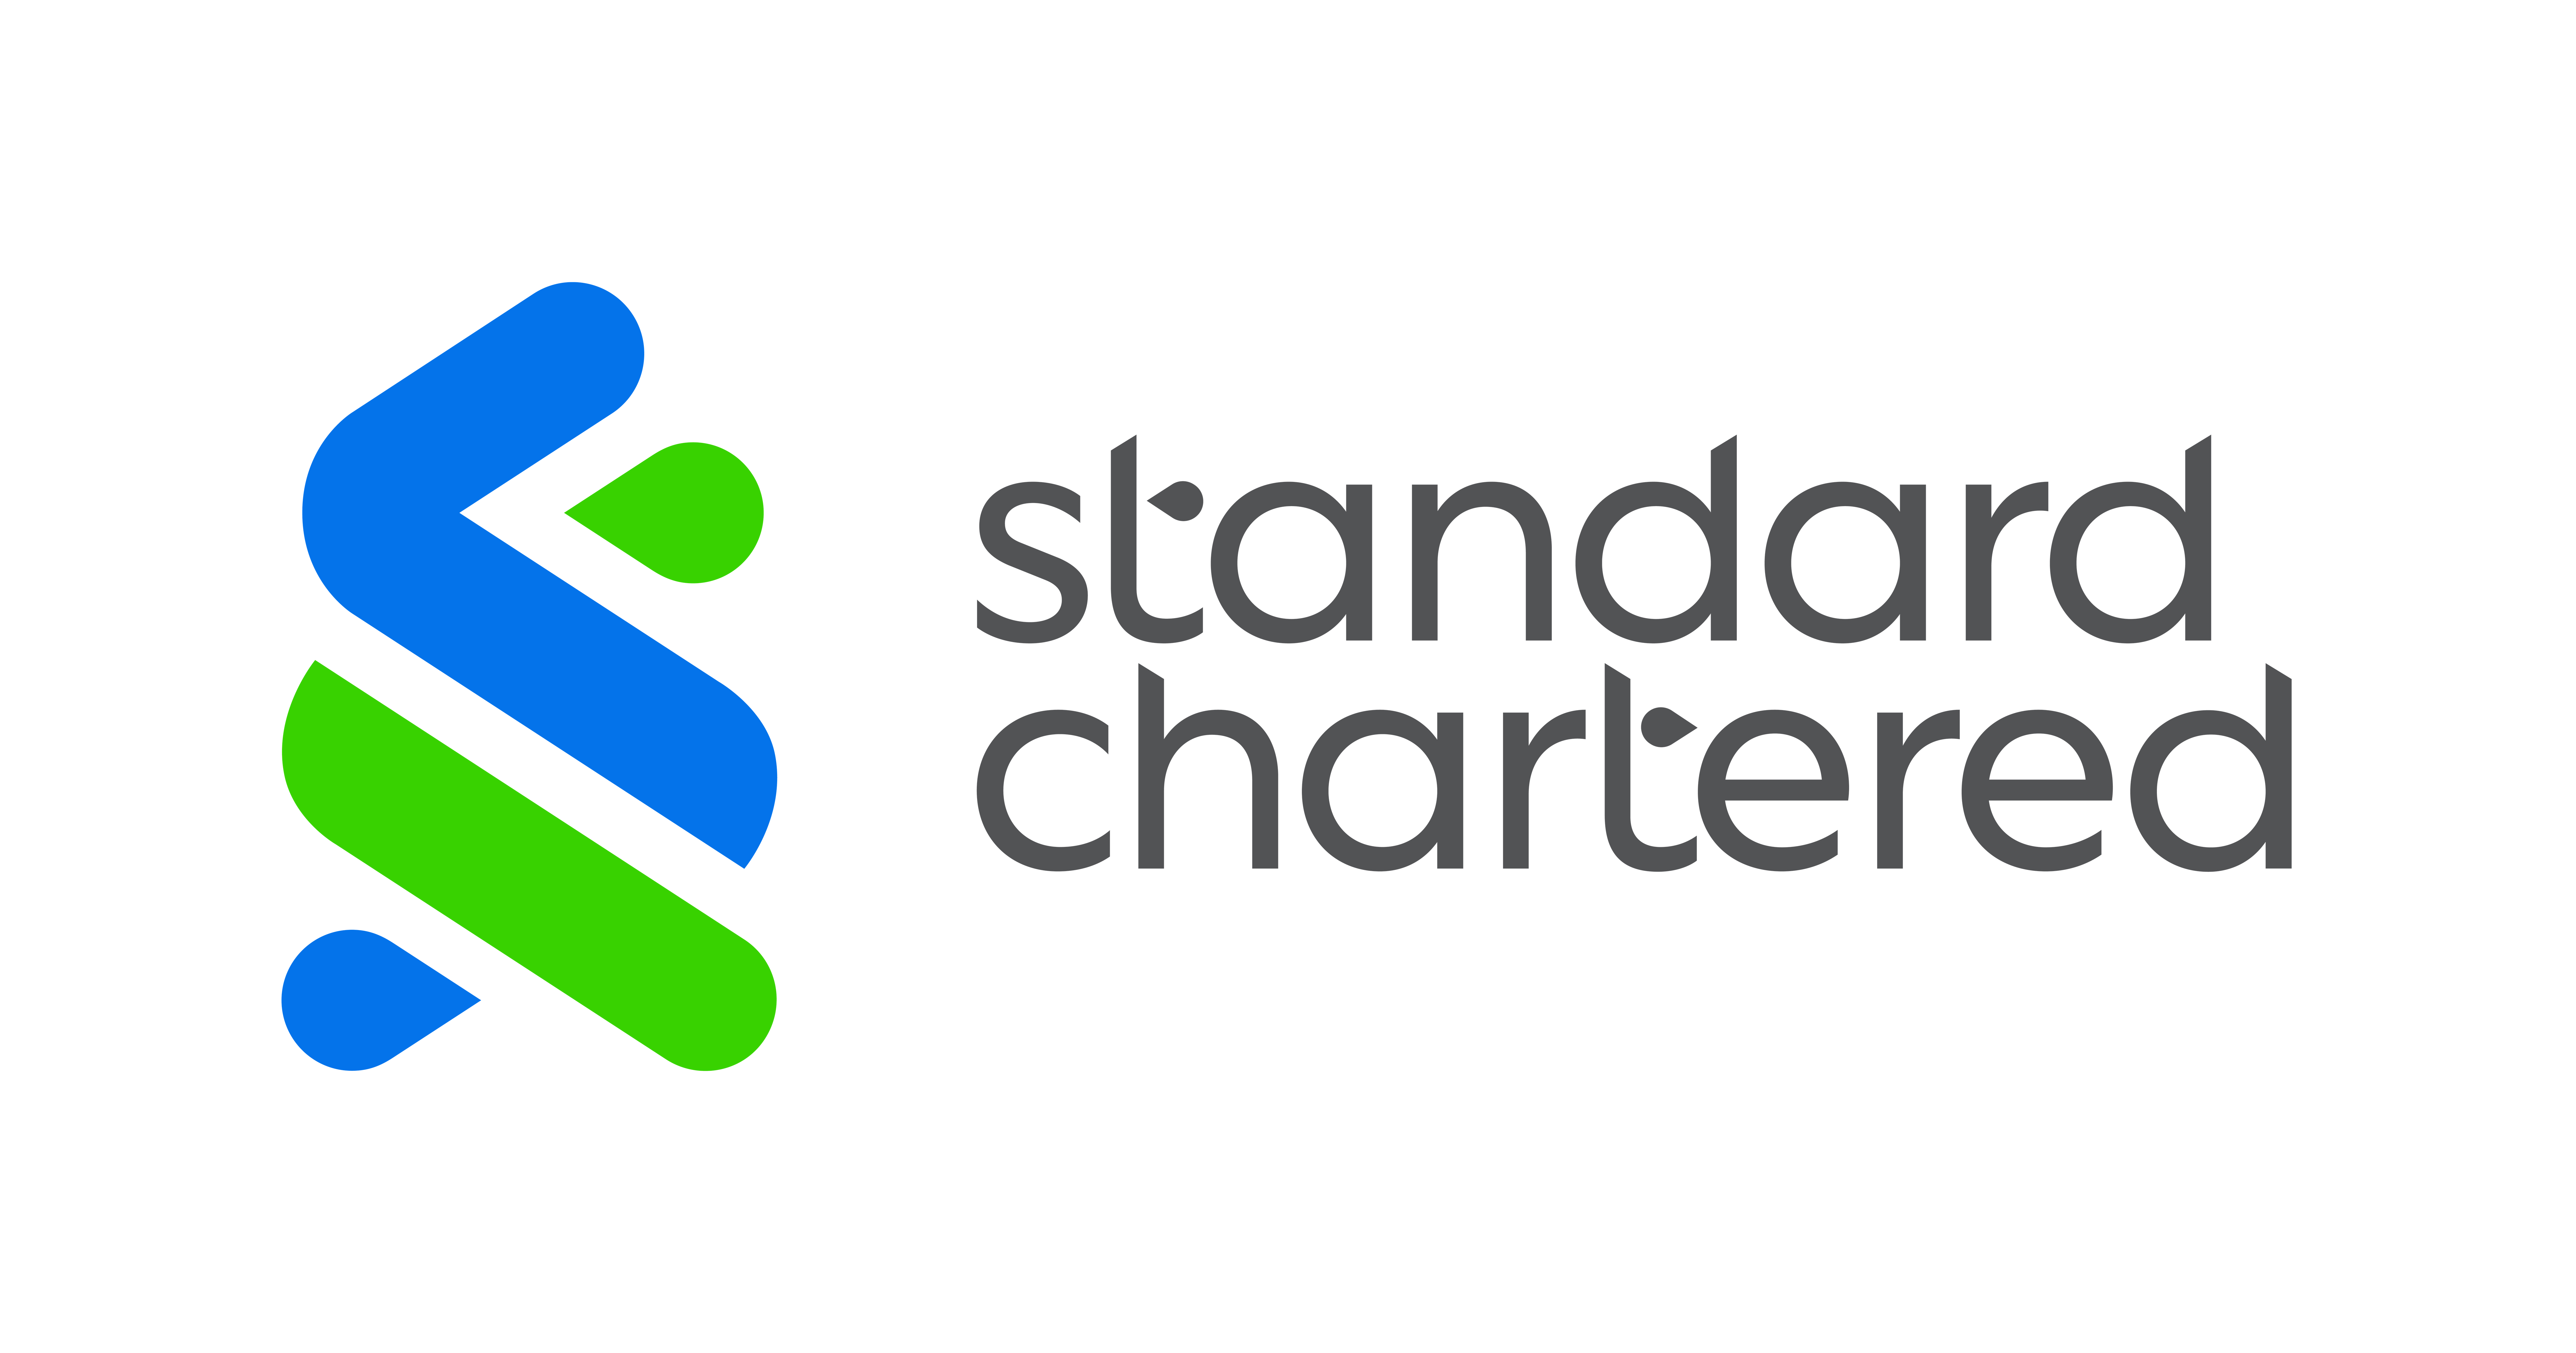 Standard Chartered Global Business Services Sp. z o.o.